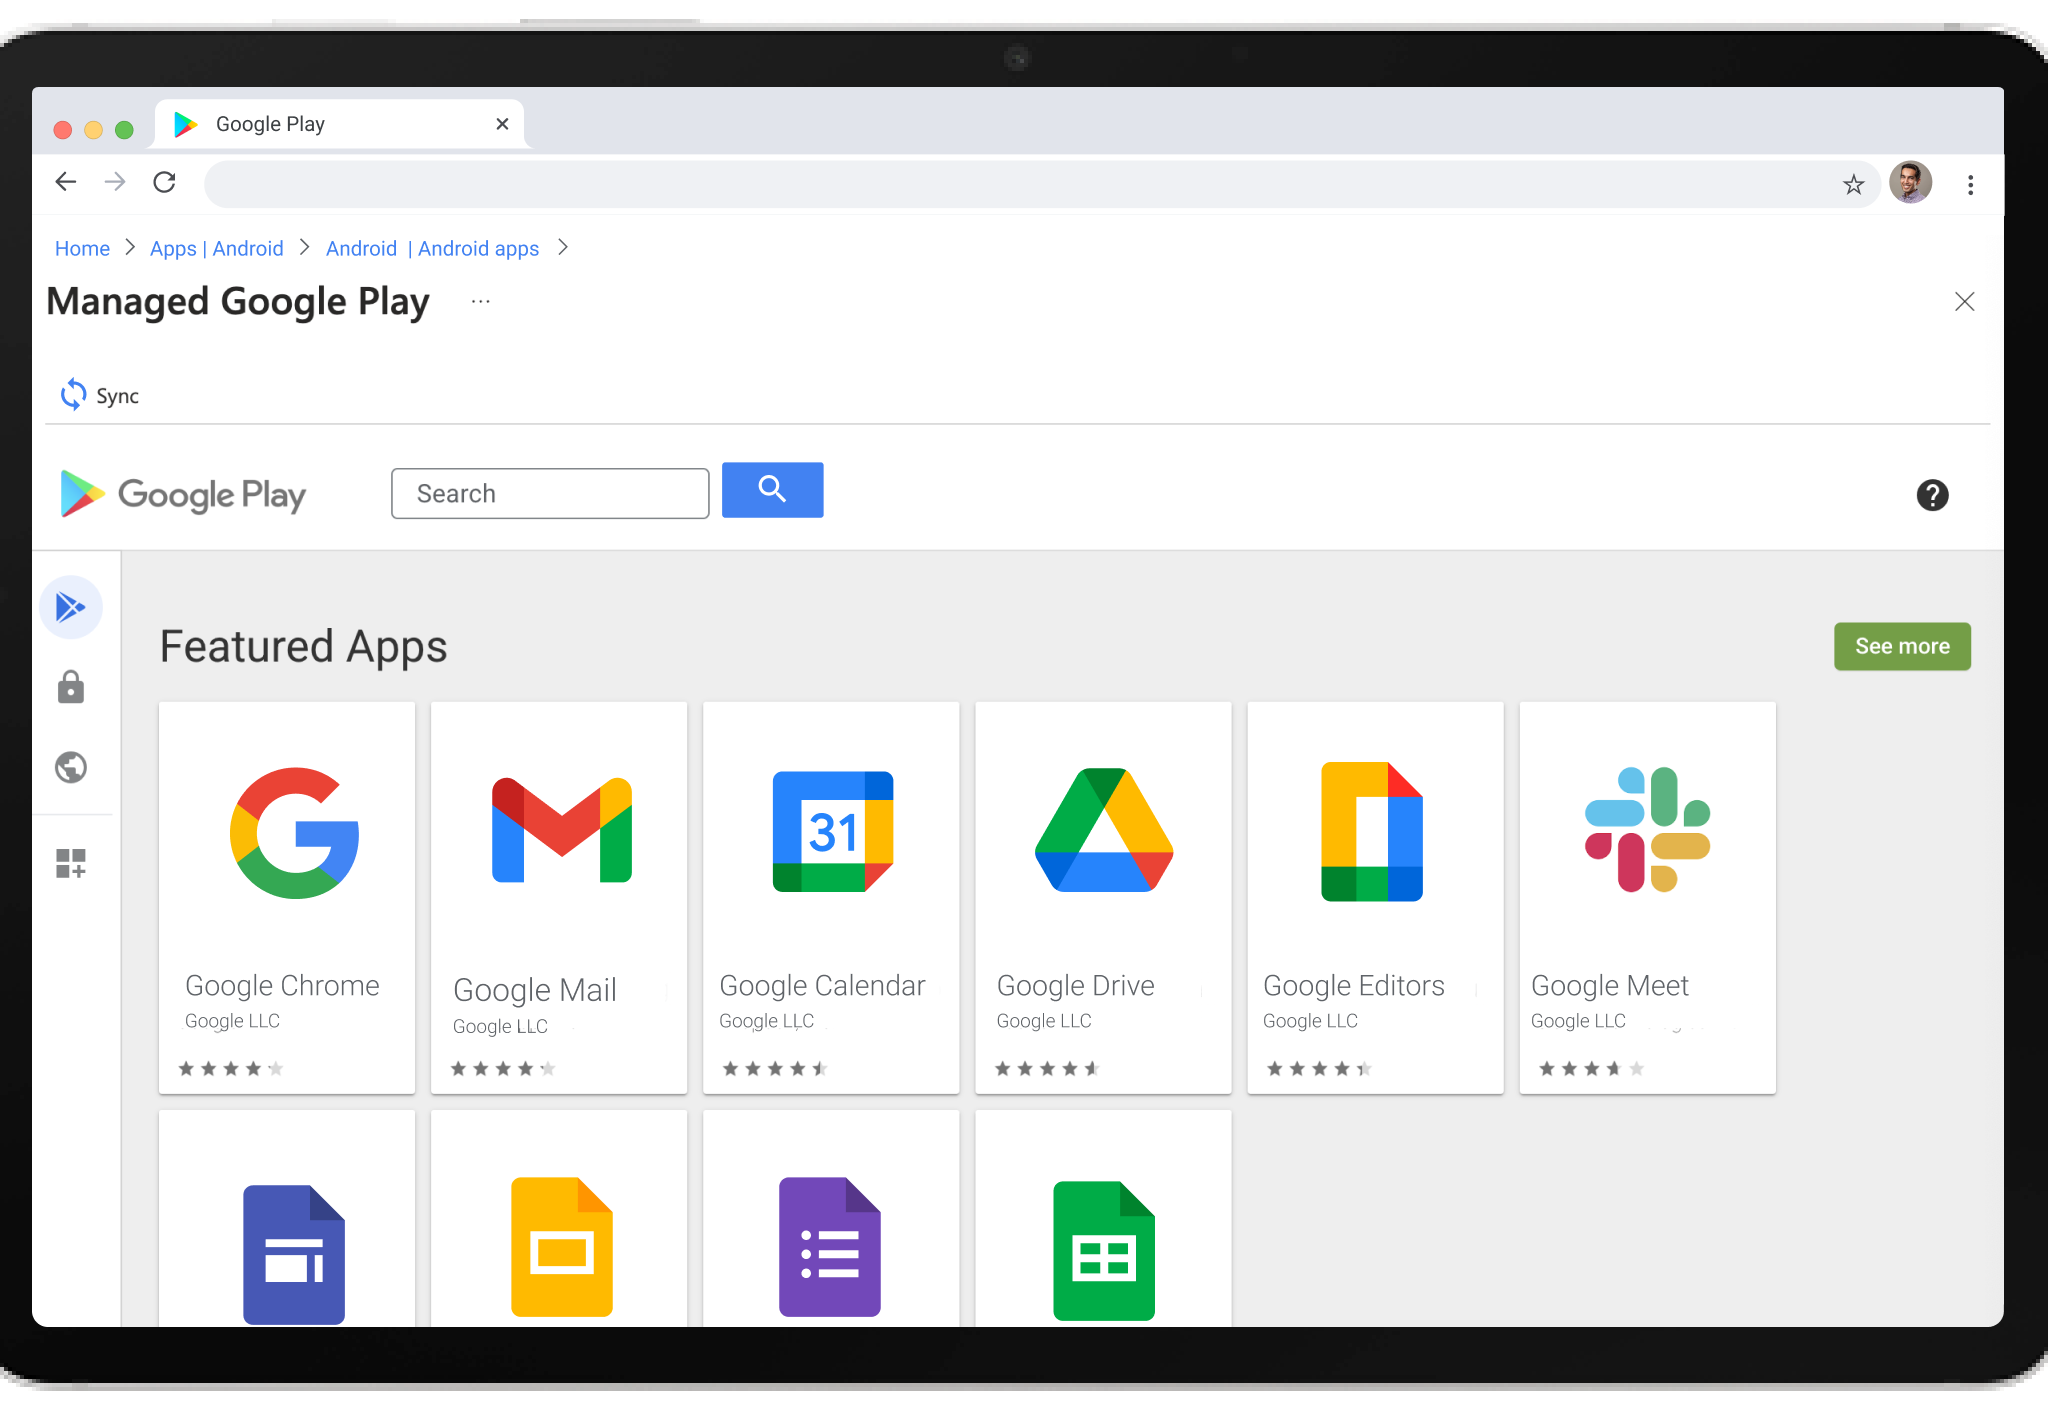 Simon Says – Apps on Google Play